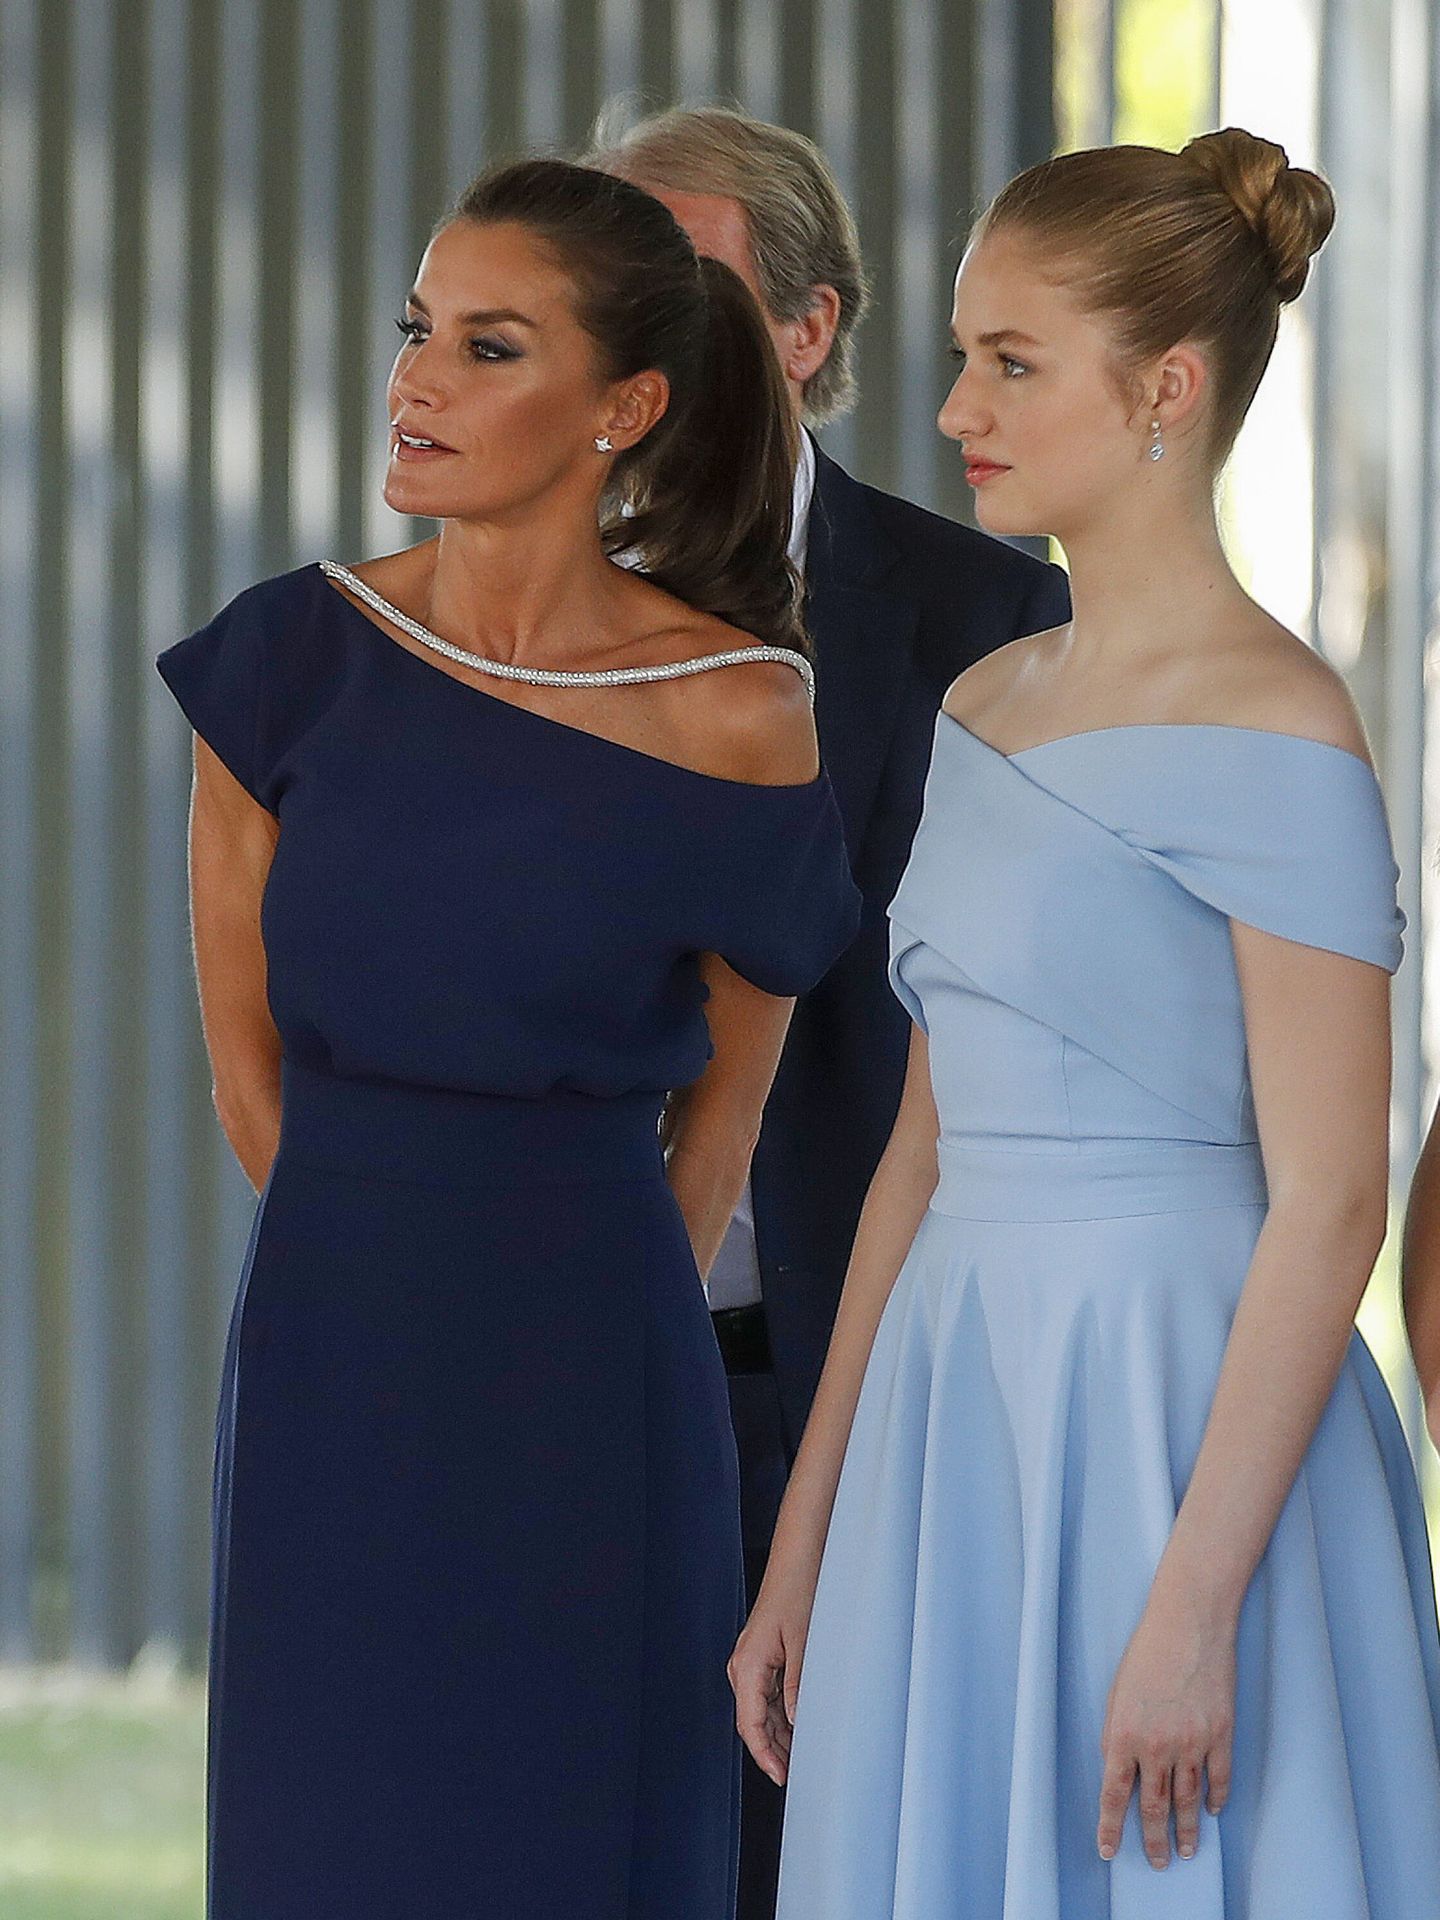 La reina Letizia, junto a la princesa Leonor antes de la ceremonia de entrega de los Premios Princesa de Girona. (EFE/Toni Albir)